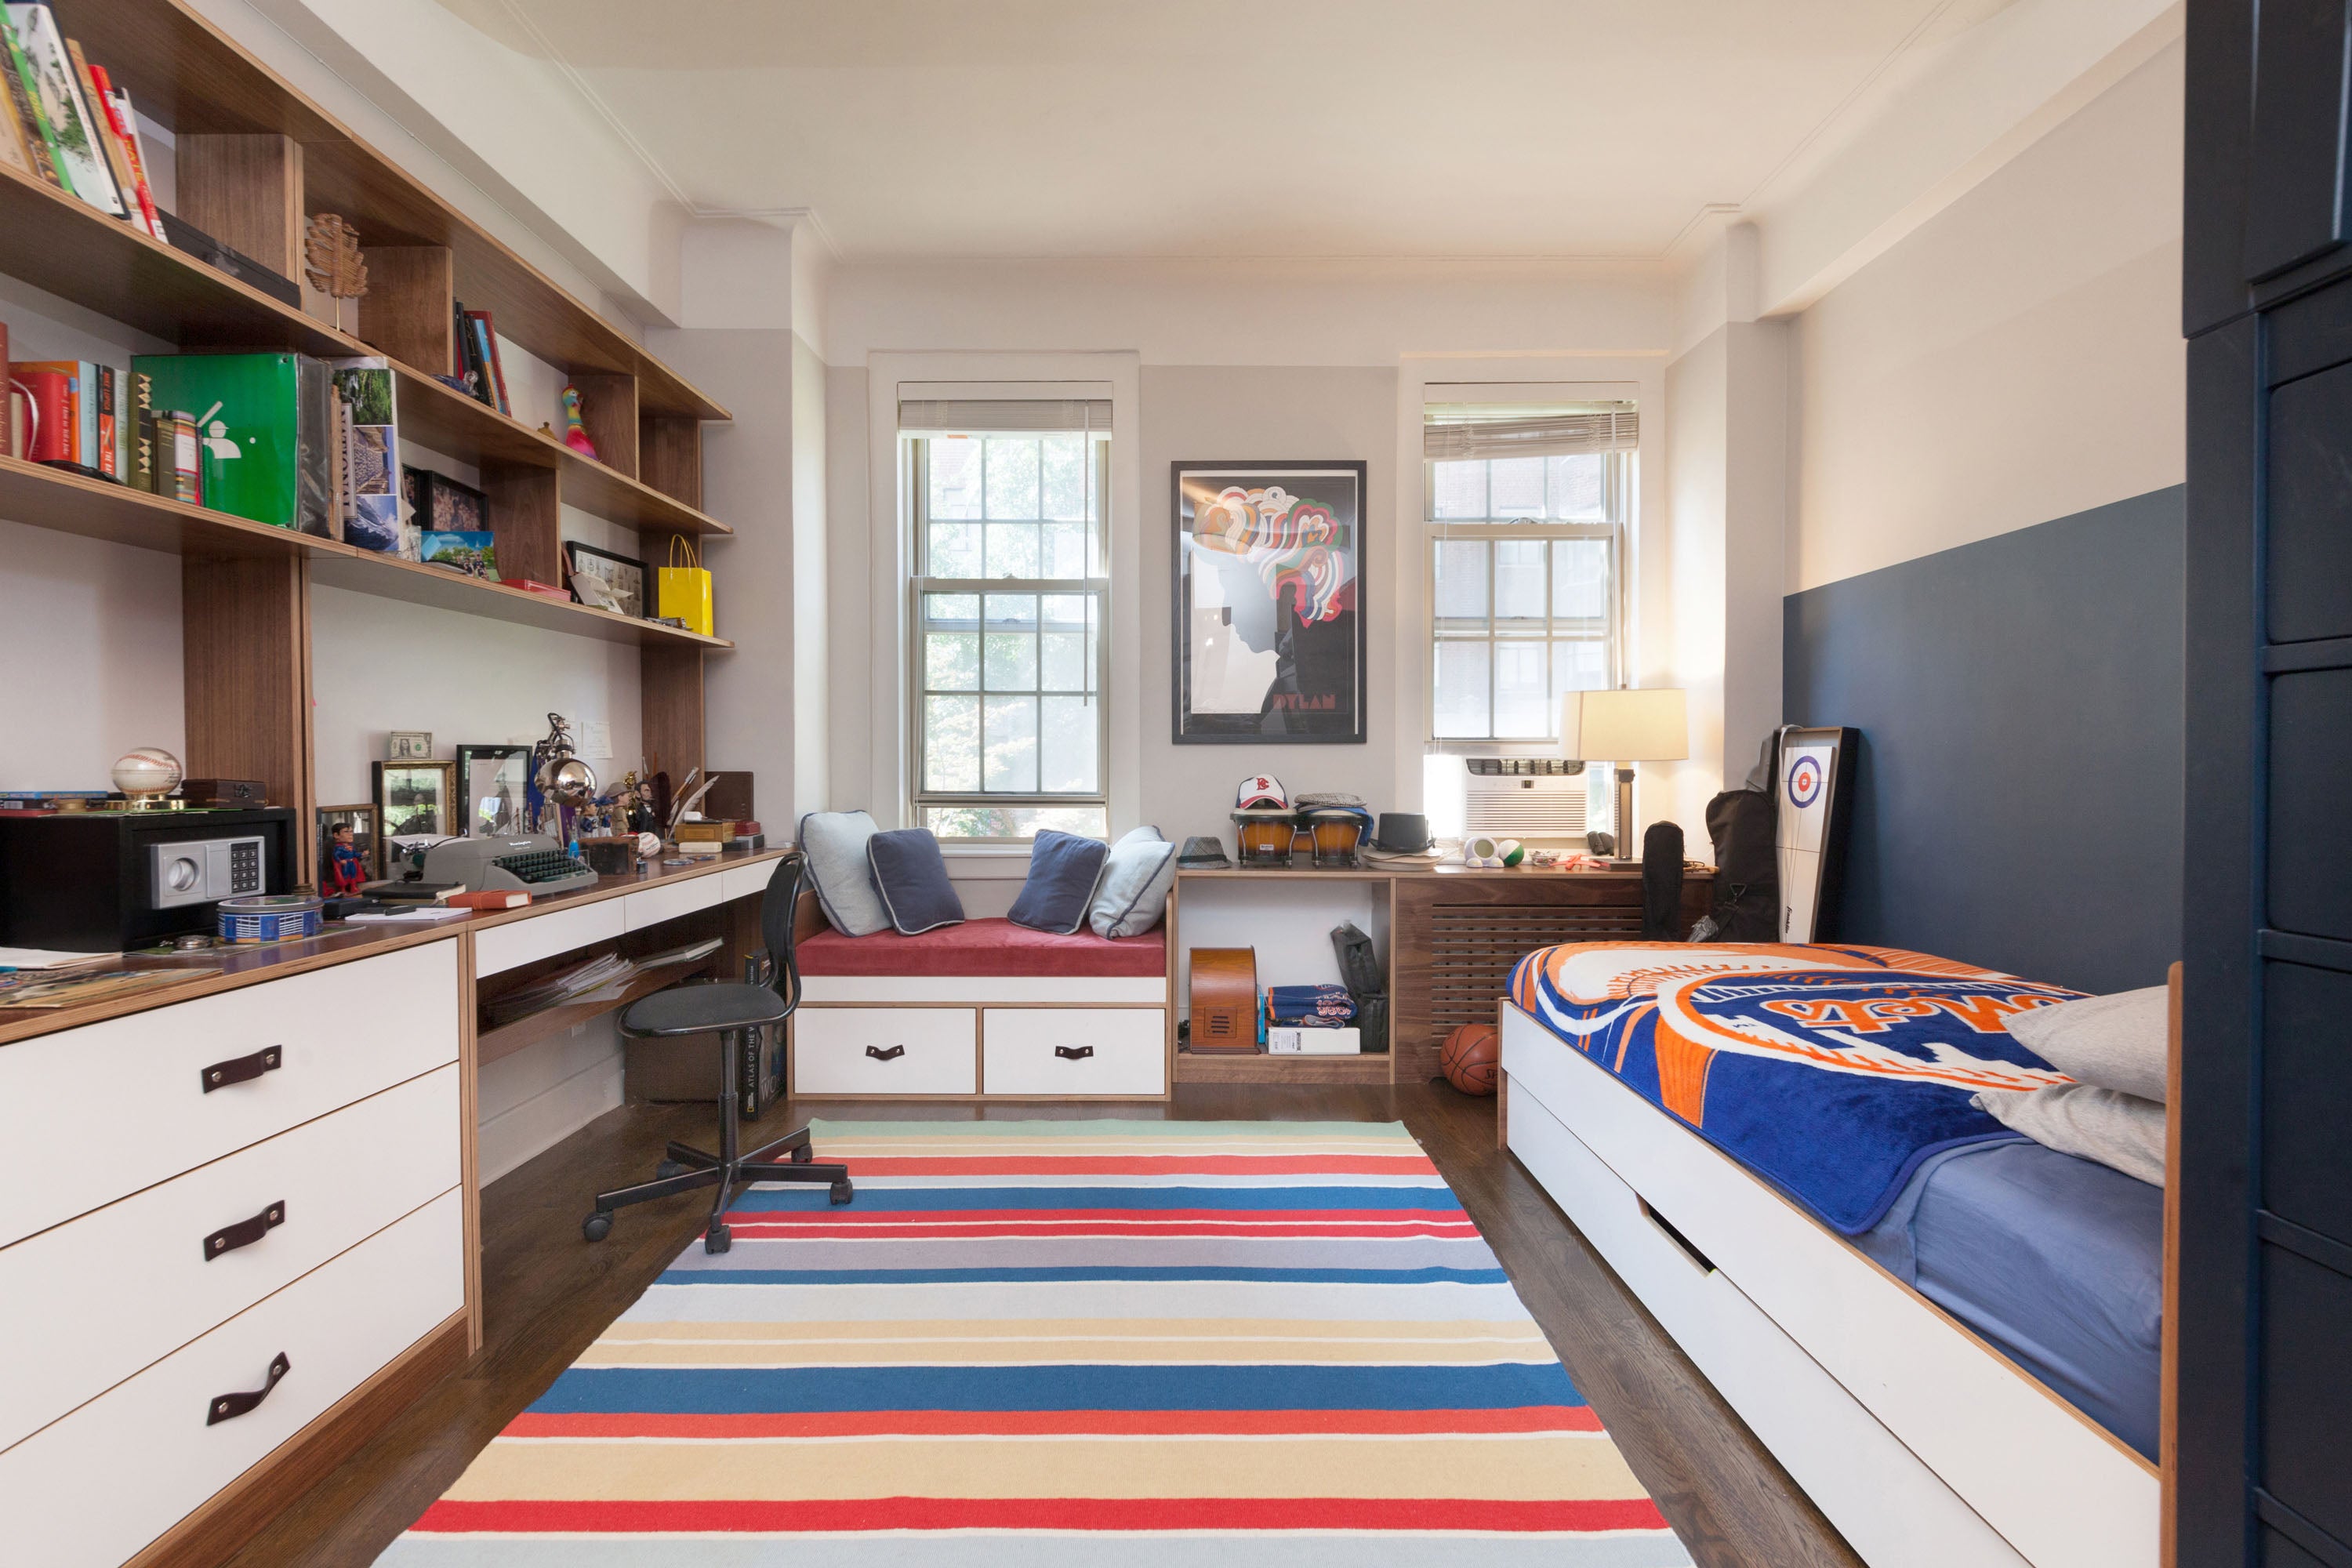 Modern bedroom with desk, bookshelves, striped rug, sports-themed bedspread.